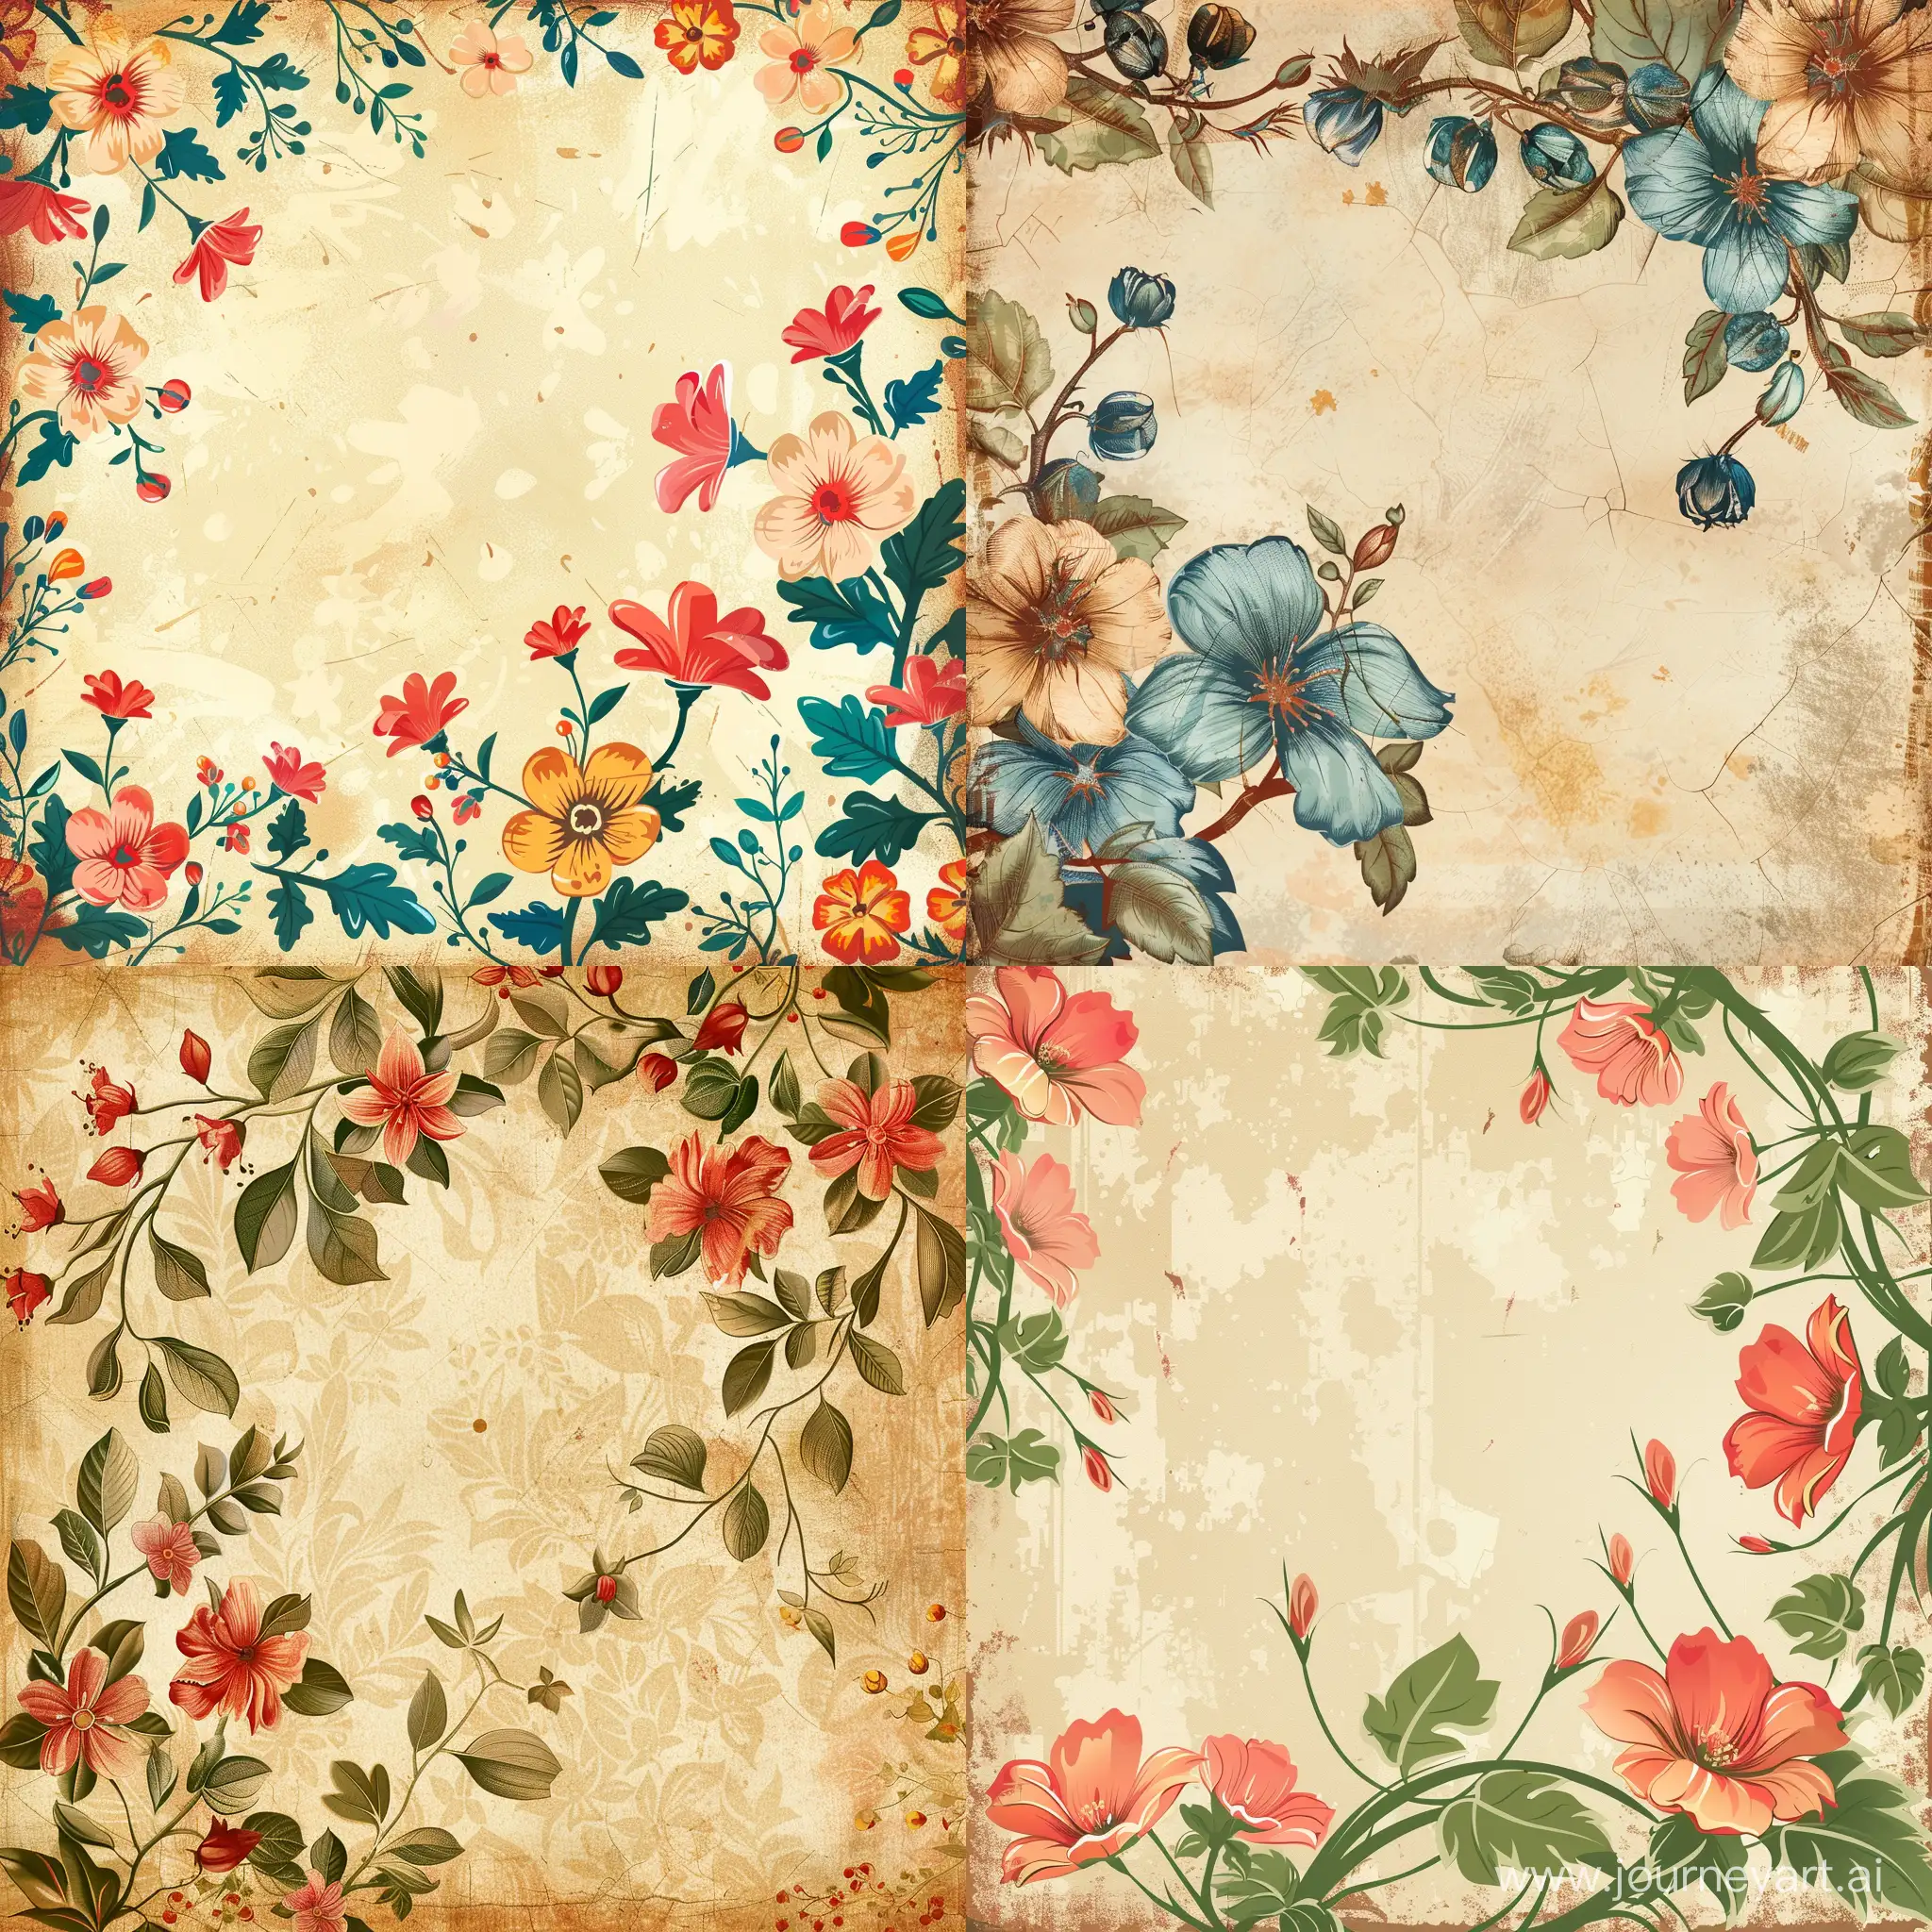 Elegant-Vintage-Floral-Background-with-Intricate-Patterns